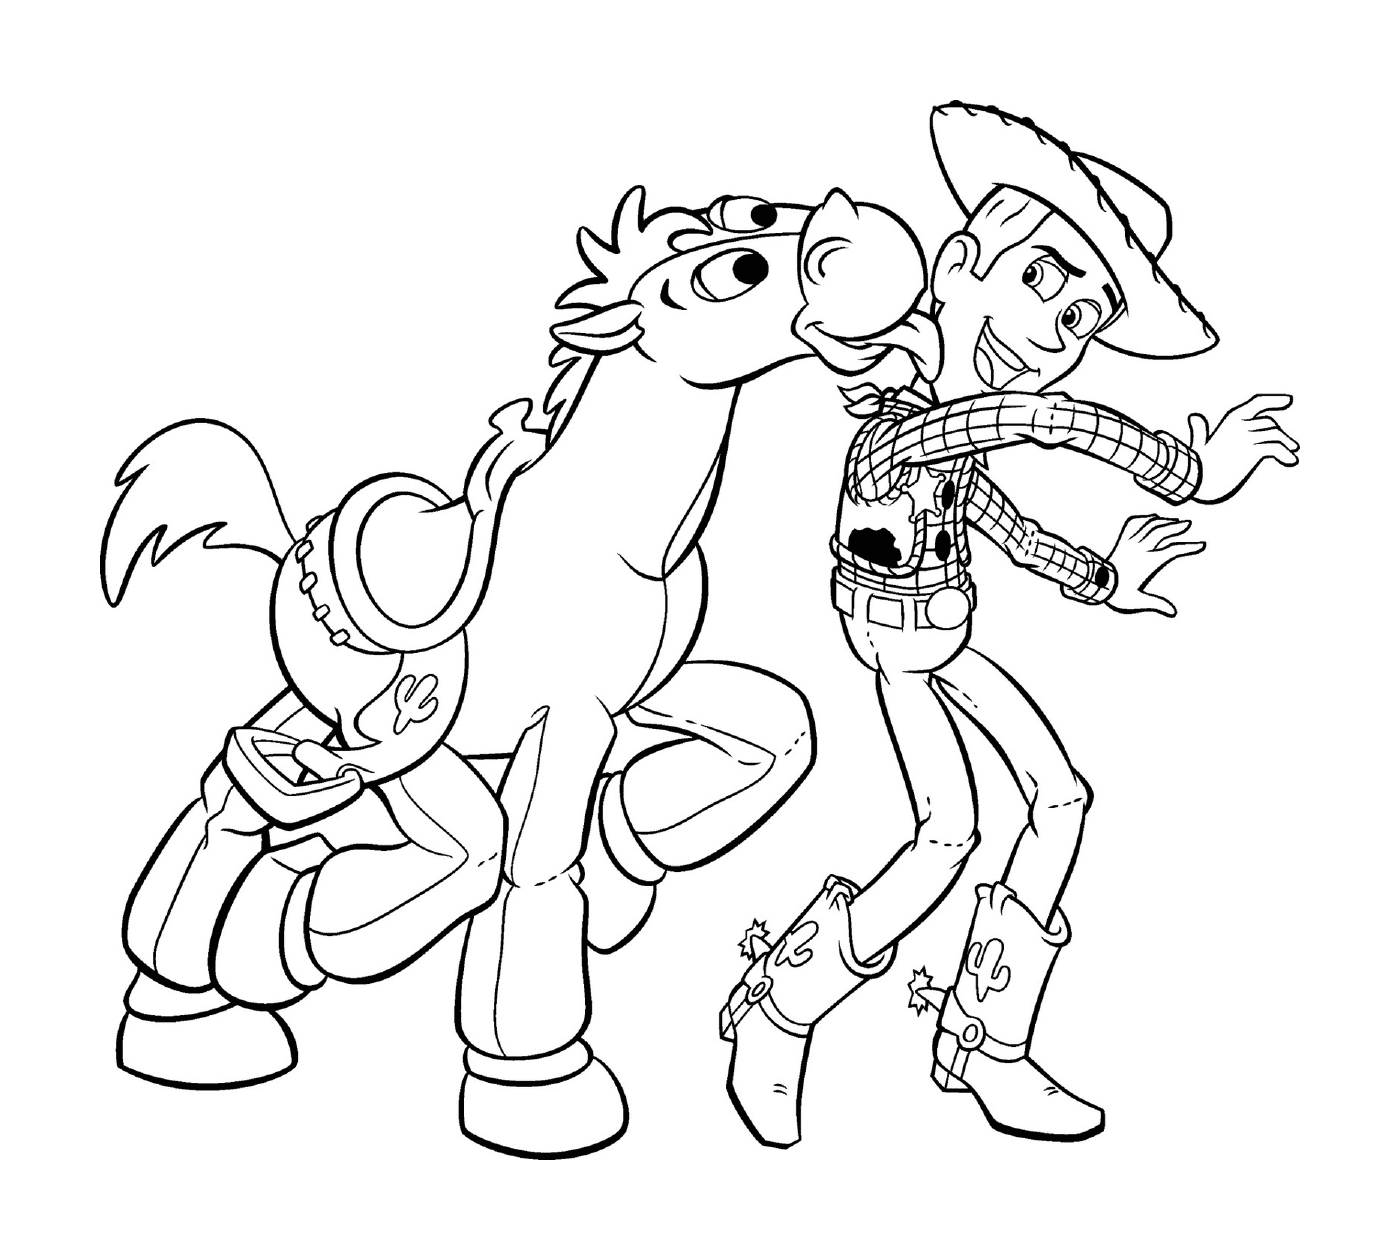  Woody e Bullseye divertirsi 